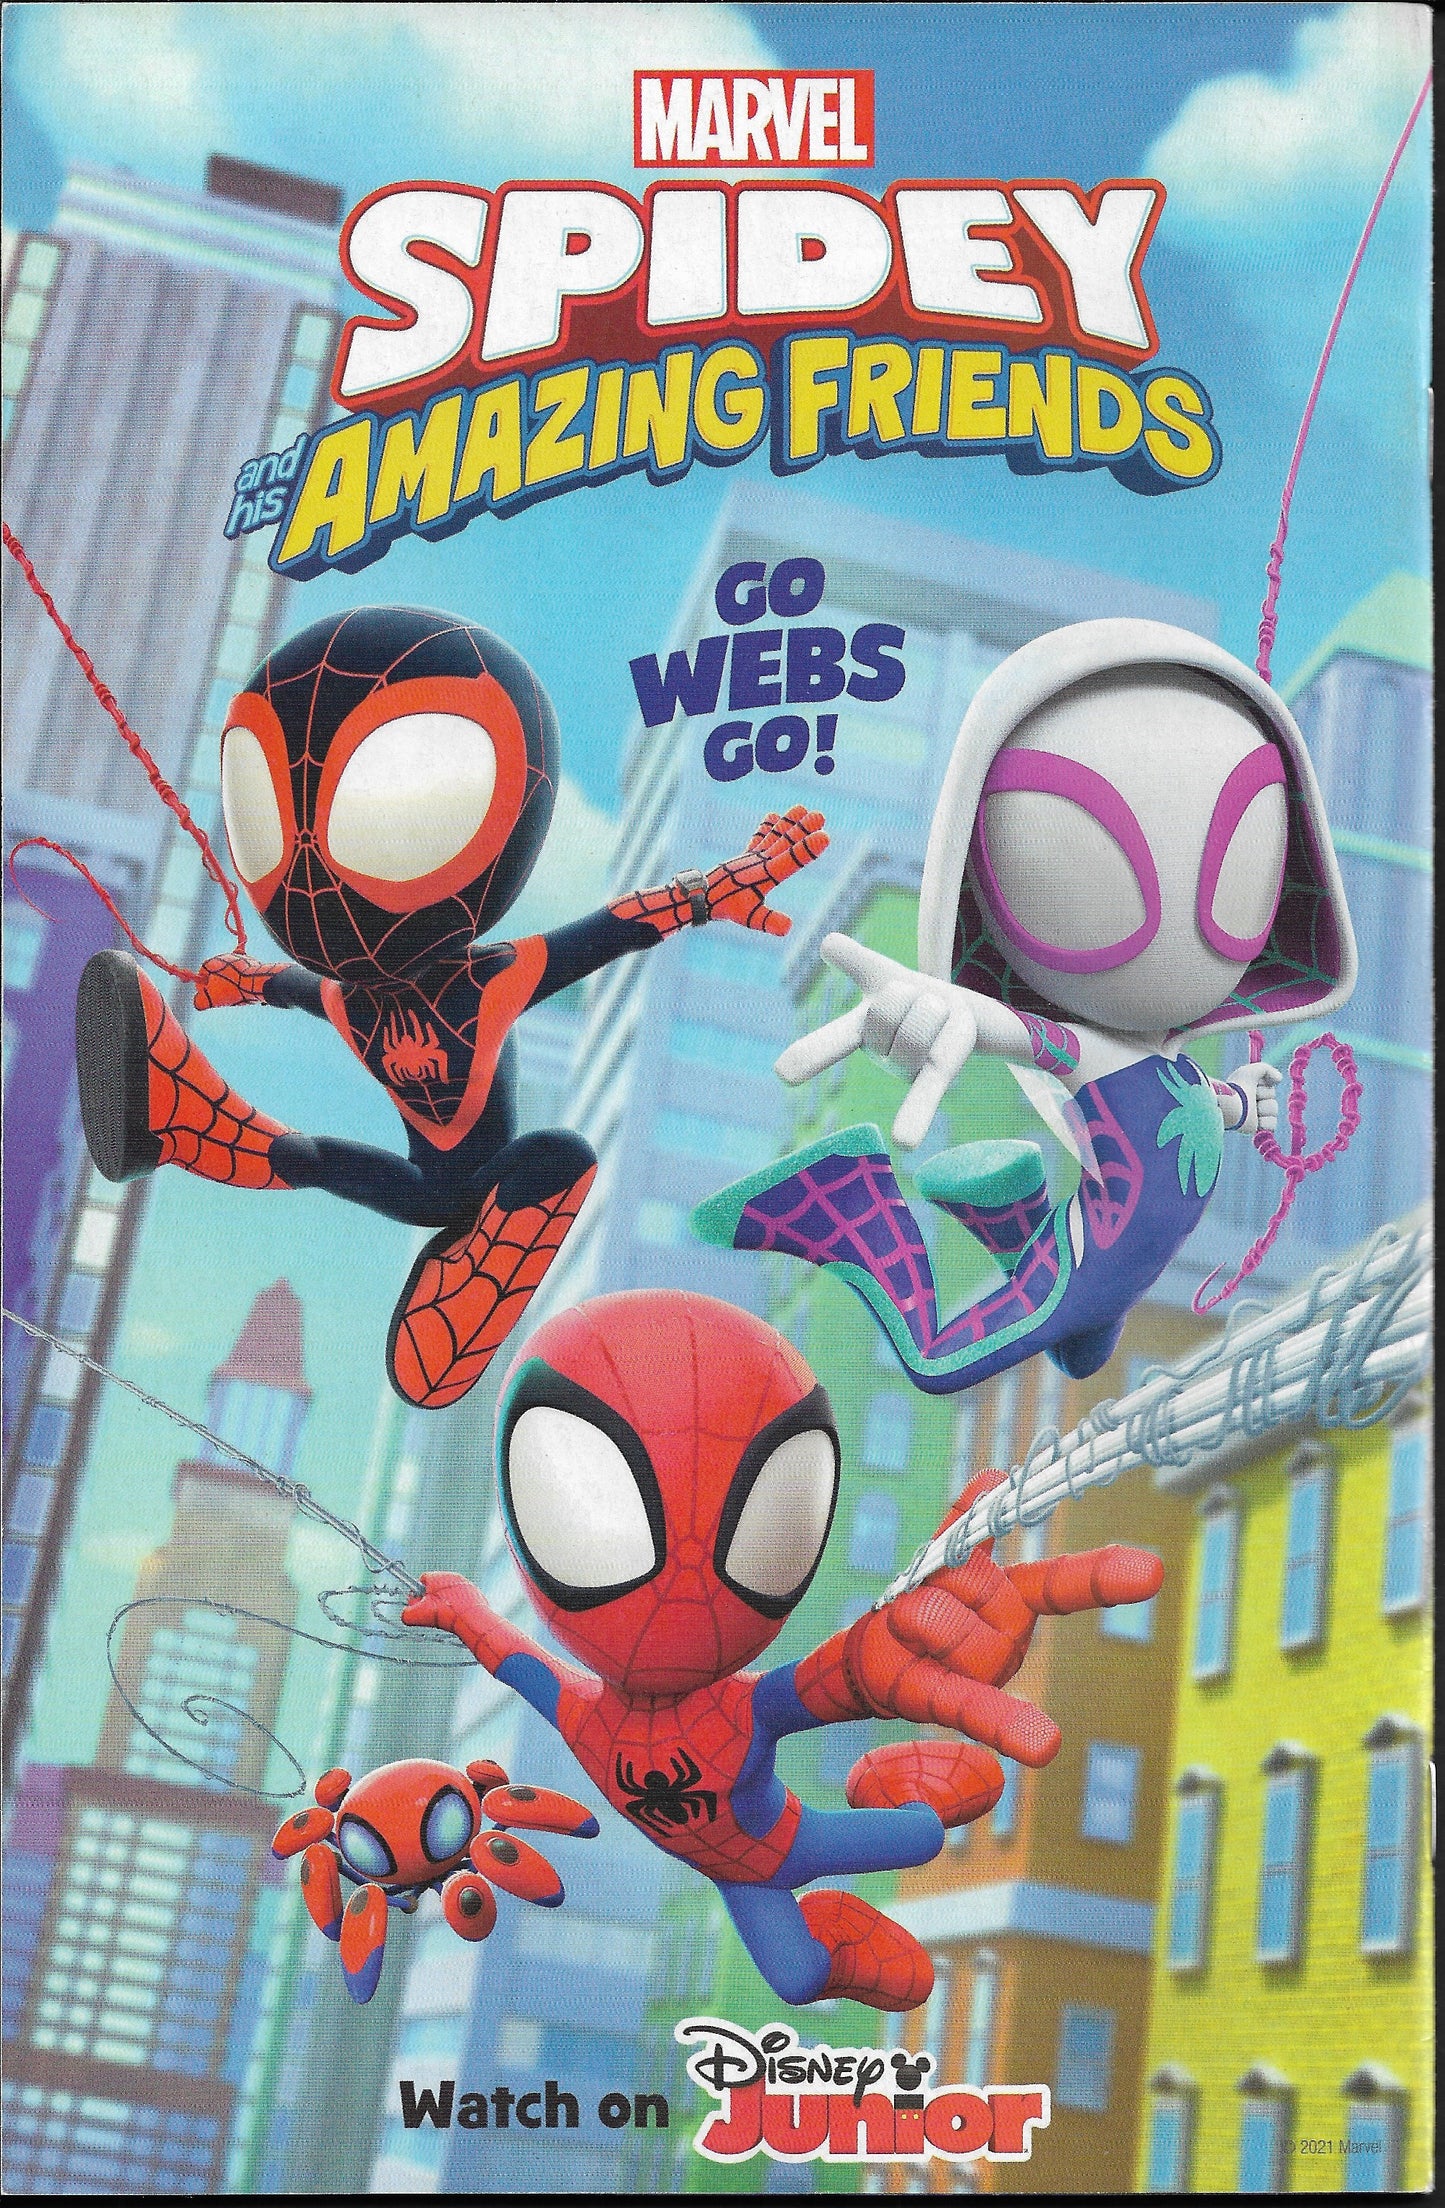 The Amazing Spider-Man #75i Variant (Marvel 2018)